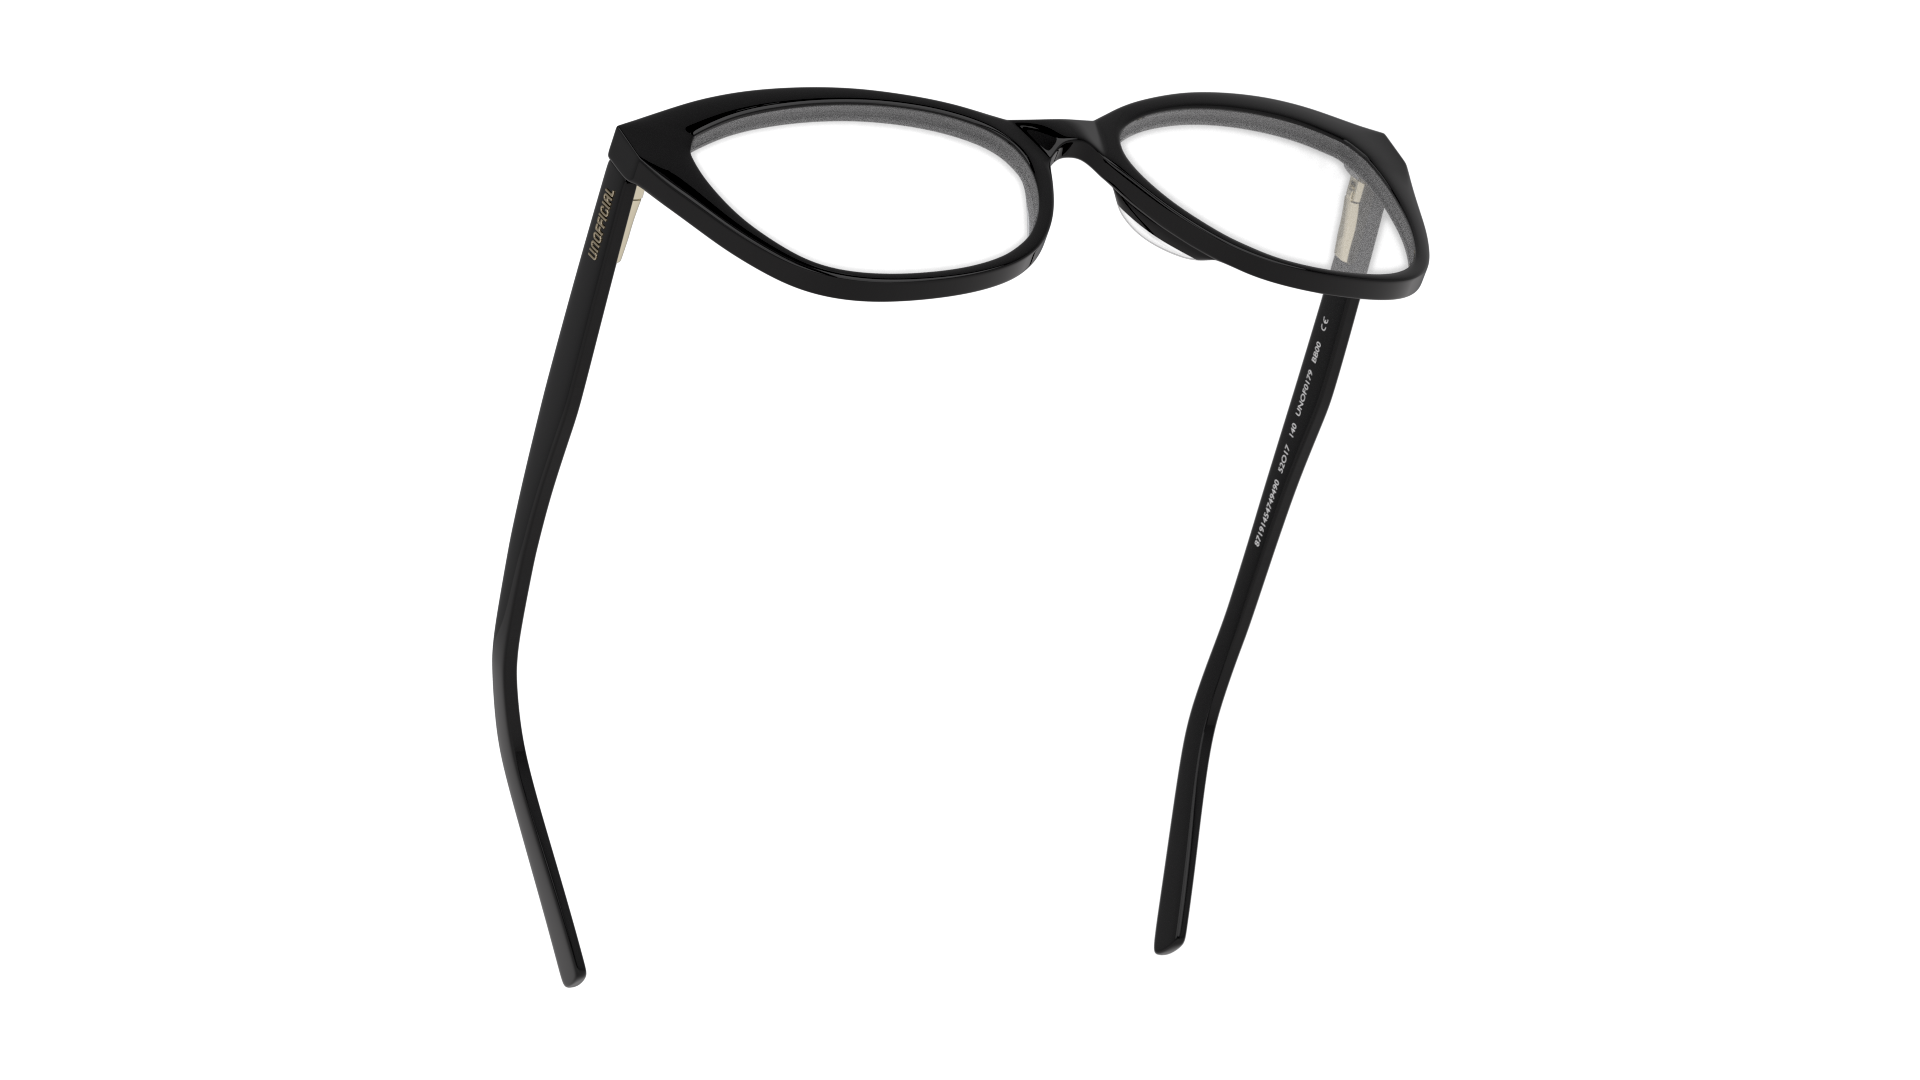 Bottom_Up Unofficial UNOF0179 Glasses Transparent / Black